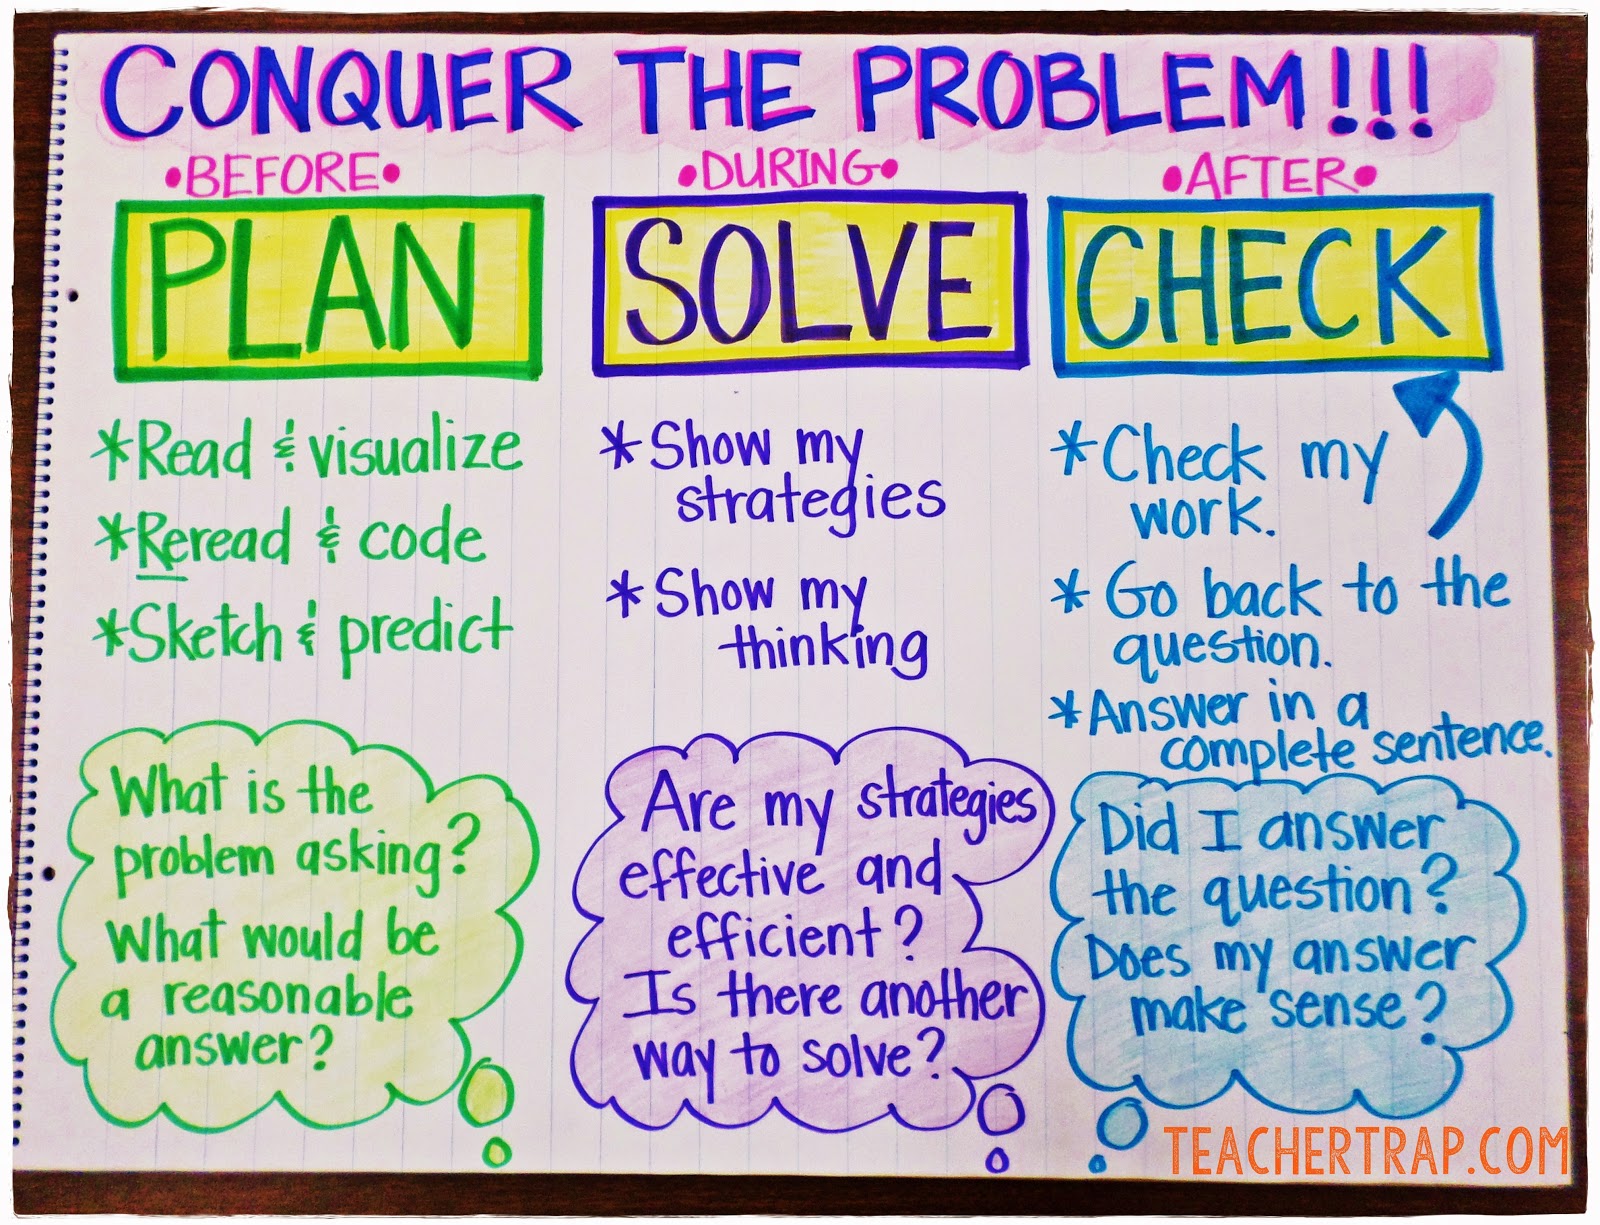 maths problem solving strategies